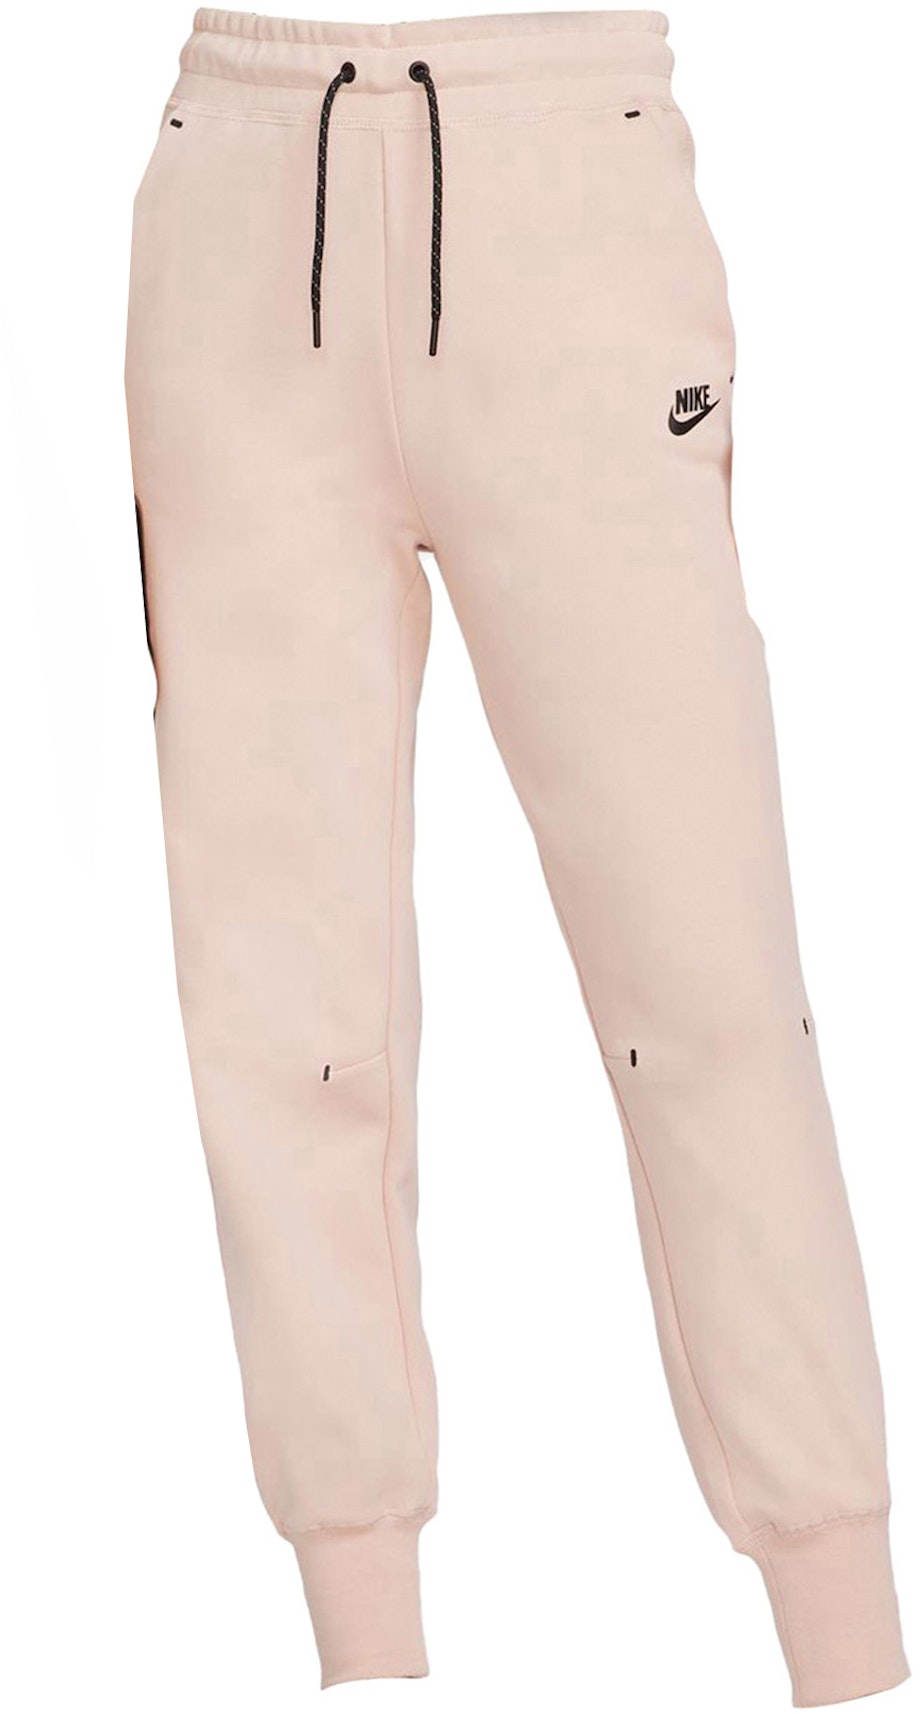 Humanistisch Vergelden Direct Nike Sportswear Women's Tech Fleece Joggers Pink Oxford/Black - FW22 - US